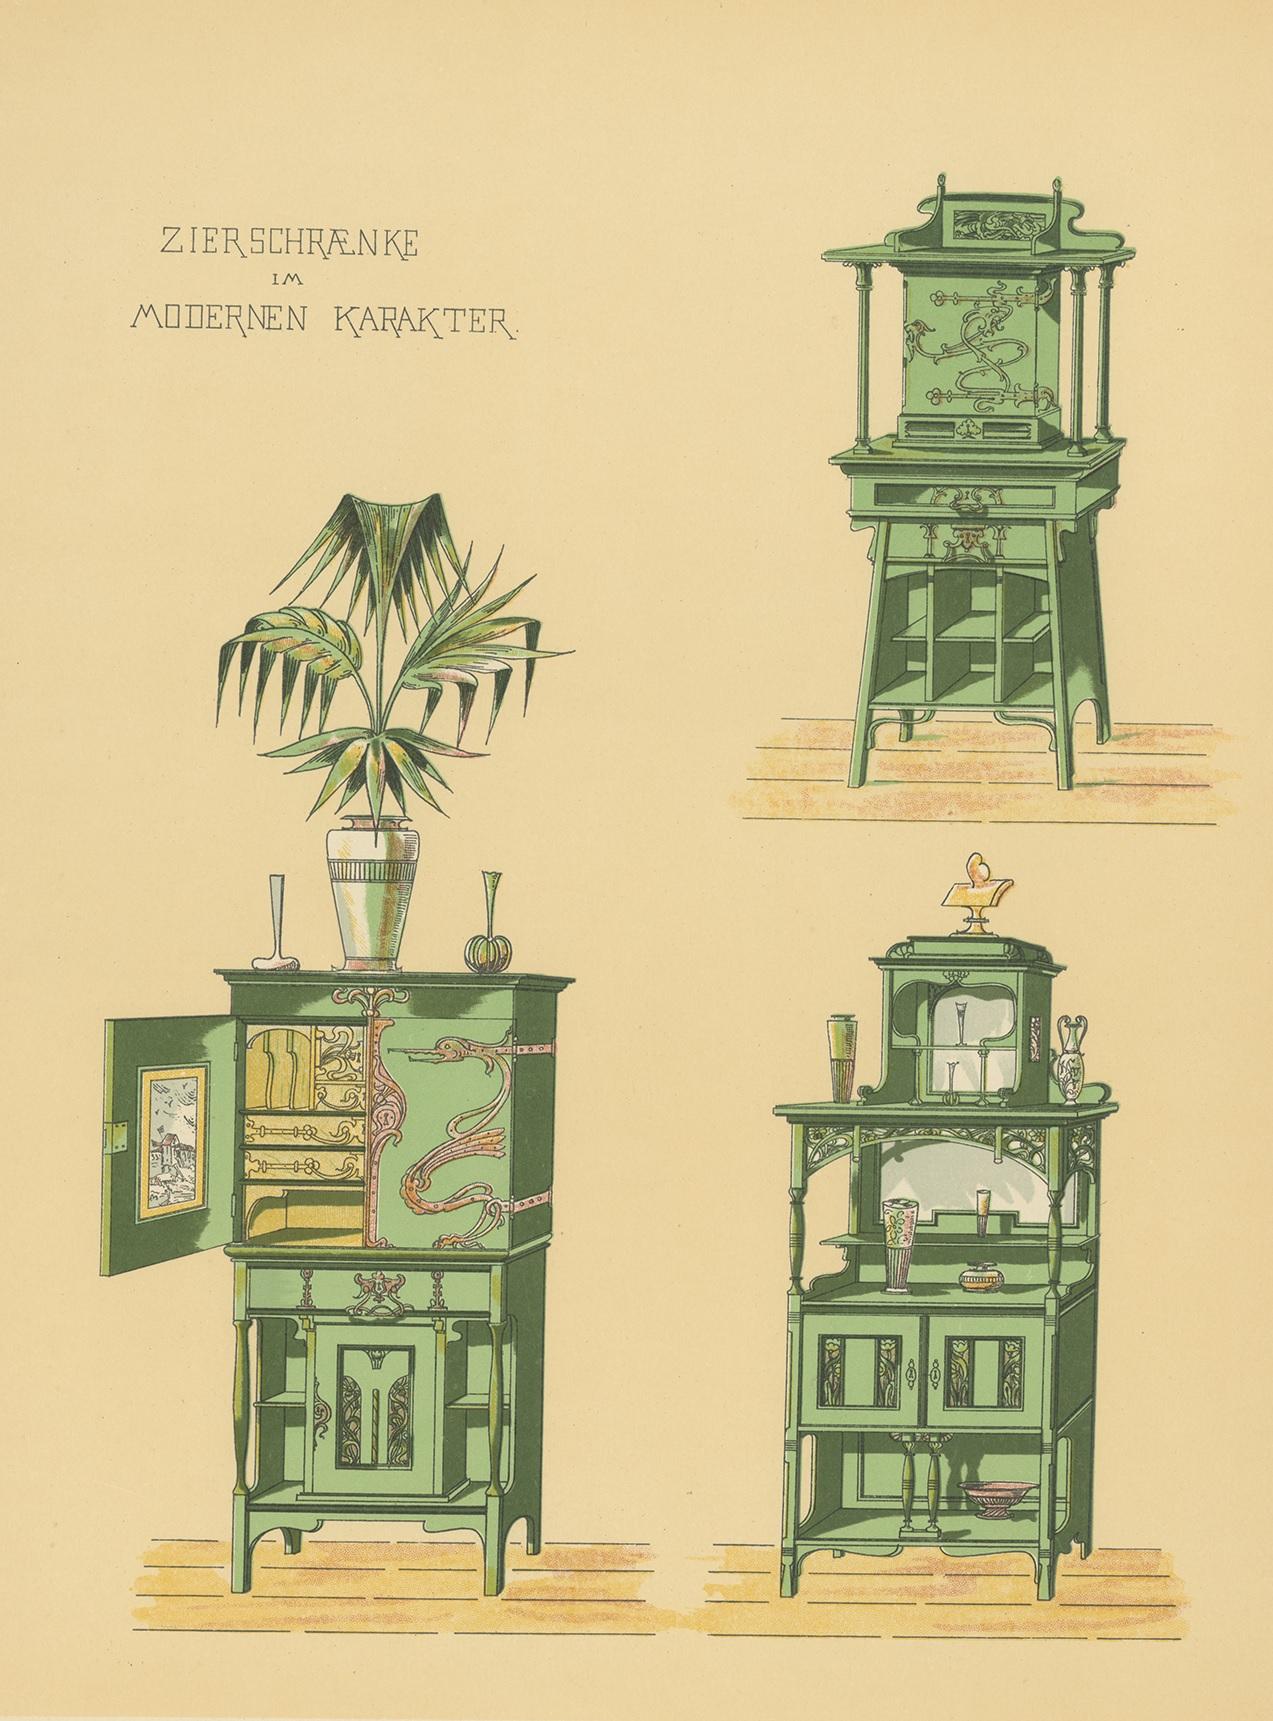 Antique print titled 'Zierschraenke im Modernen Karakter'. Lithograph of decorative cabinets. This print originates from 'Det Moderna Hemmet' by Johannes Kramer. Published by Ferdinand Hey'l, circa 1910.